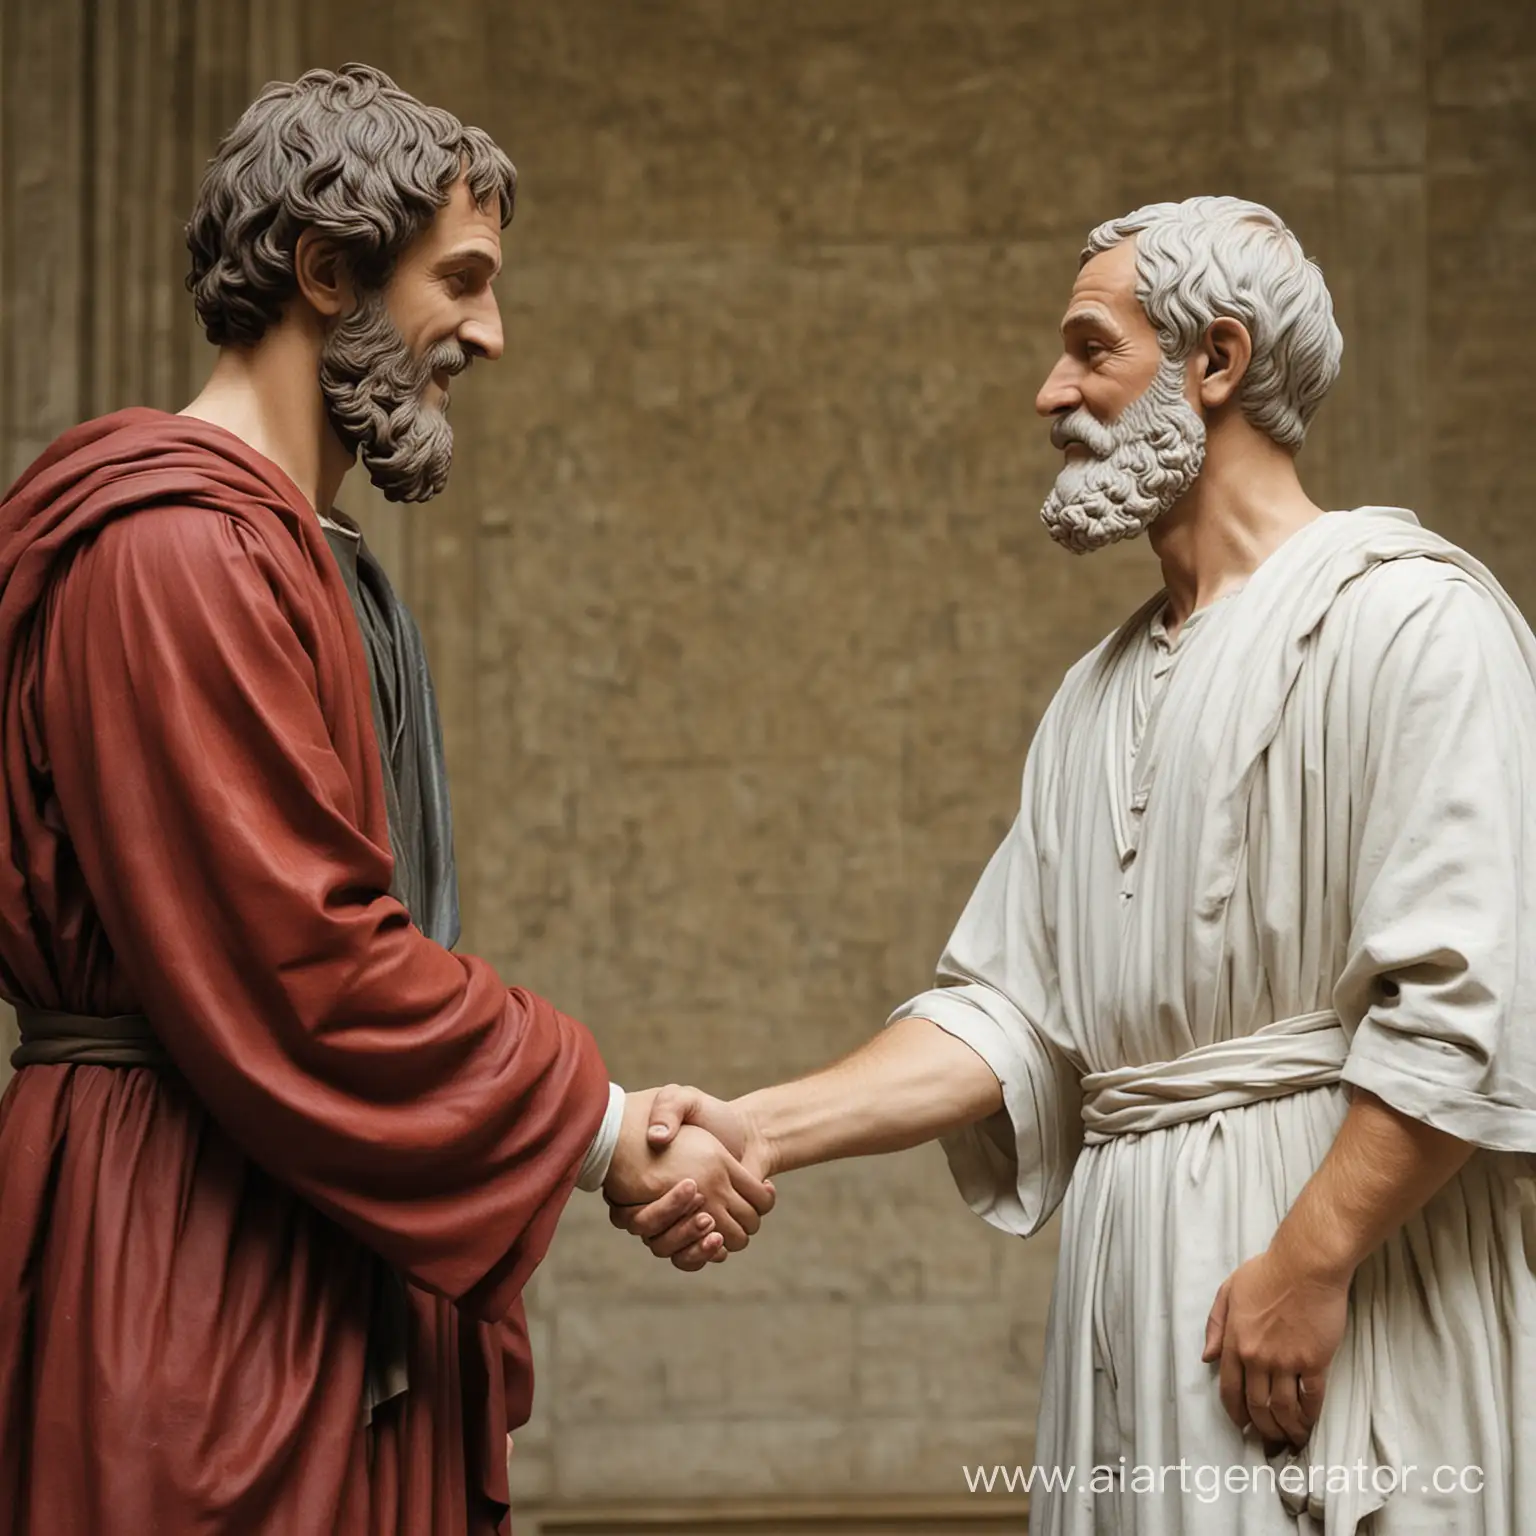 Студент медицинского вуза жмёт руку Аристотелю